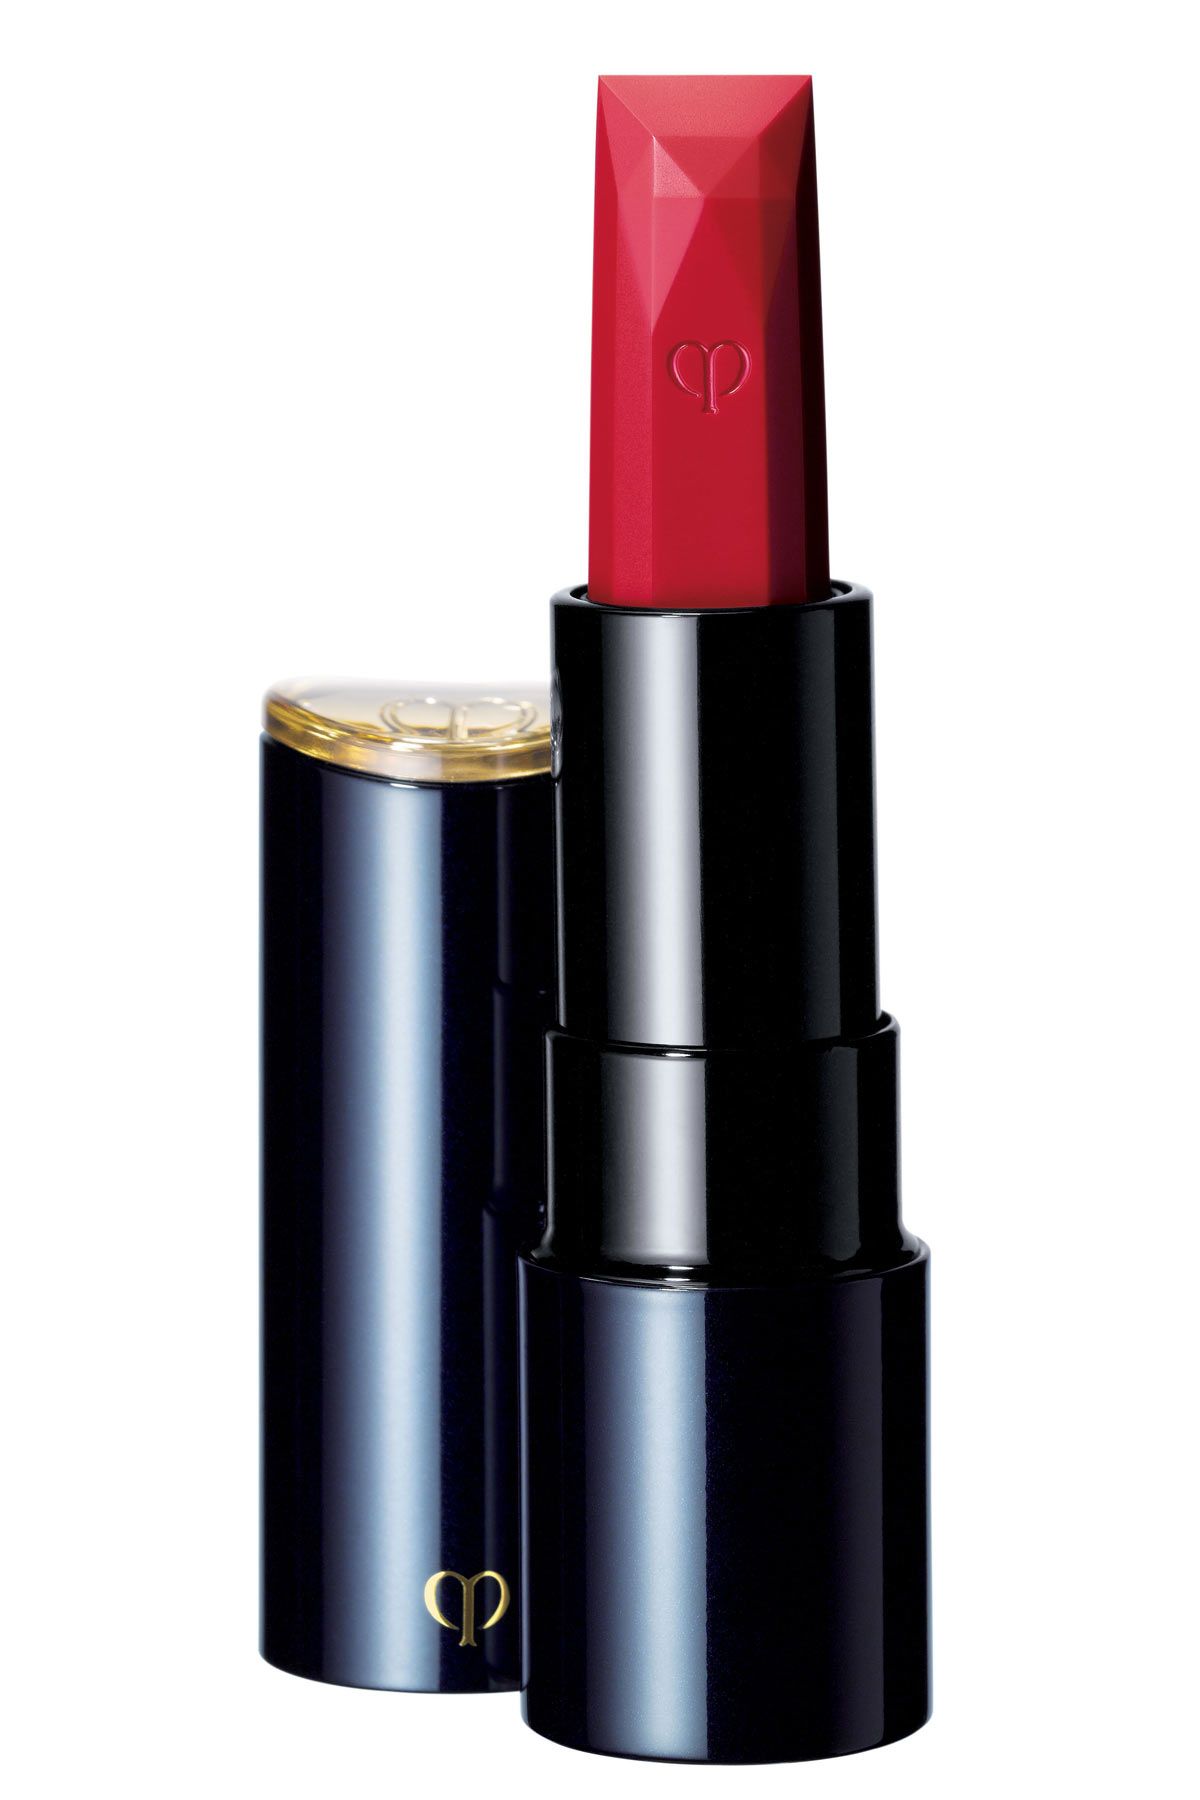 Testing the World's Most Luxurious Lipsticks